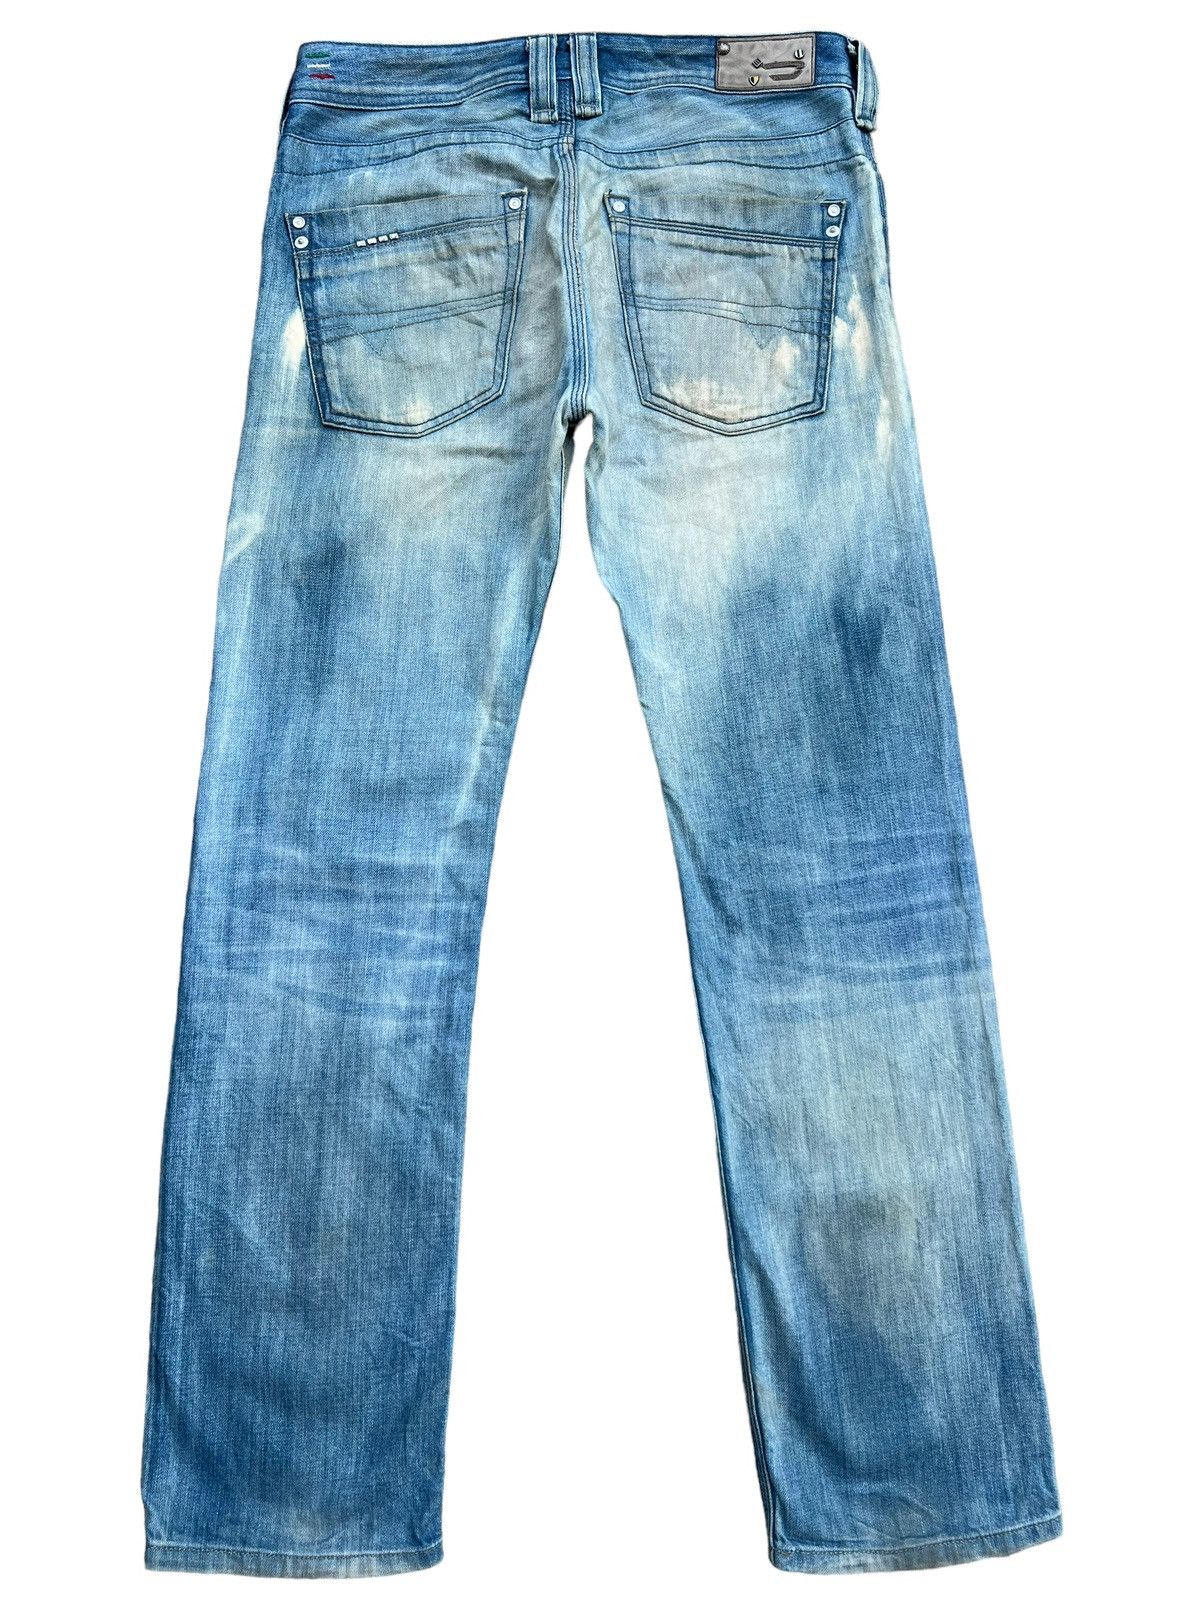 Vintage Diesel Leather Faded Distressed Denim Jeans 32x31 - 3